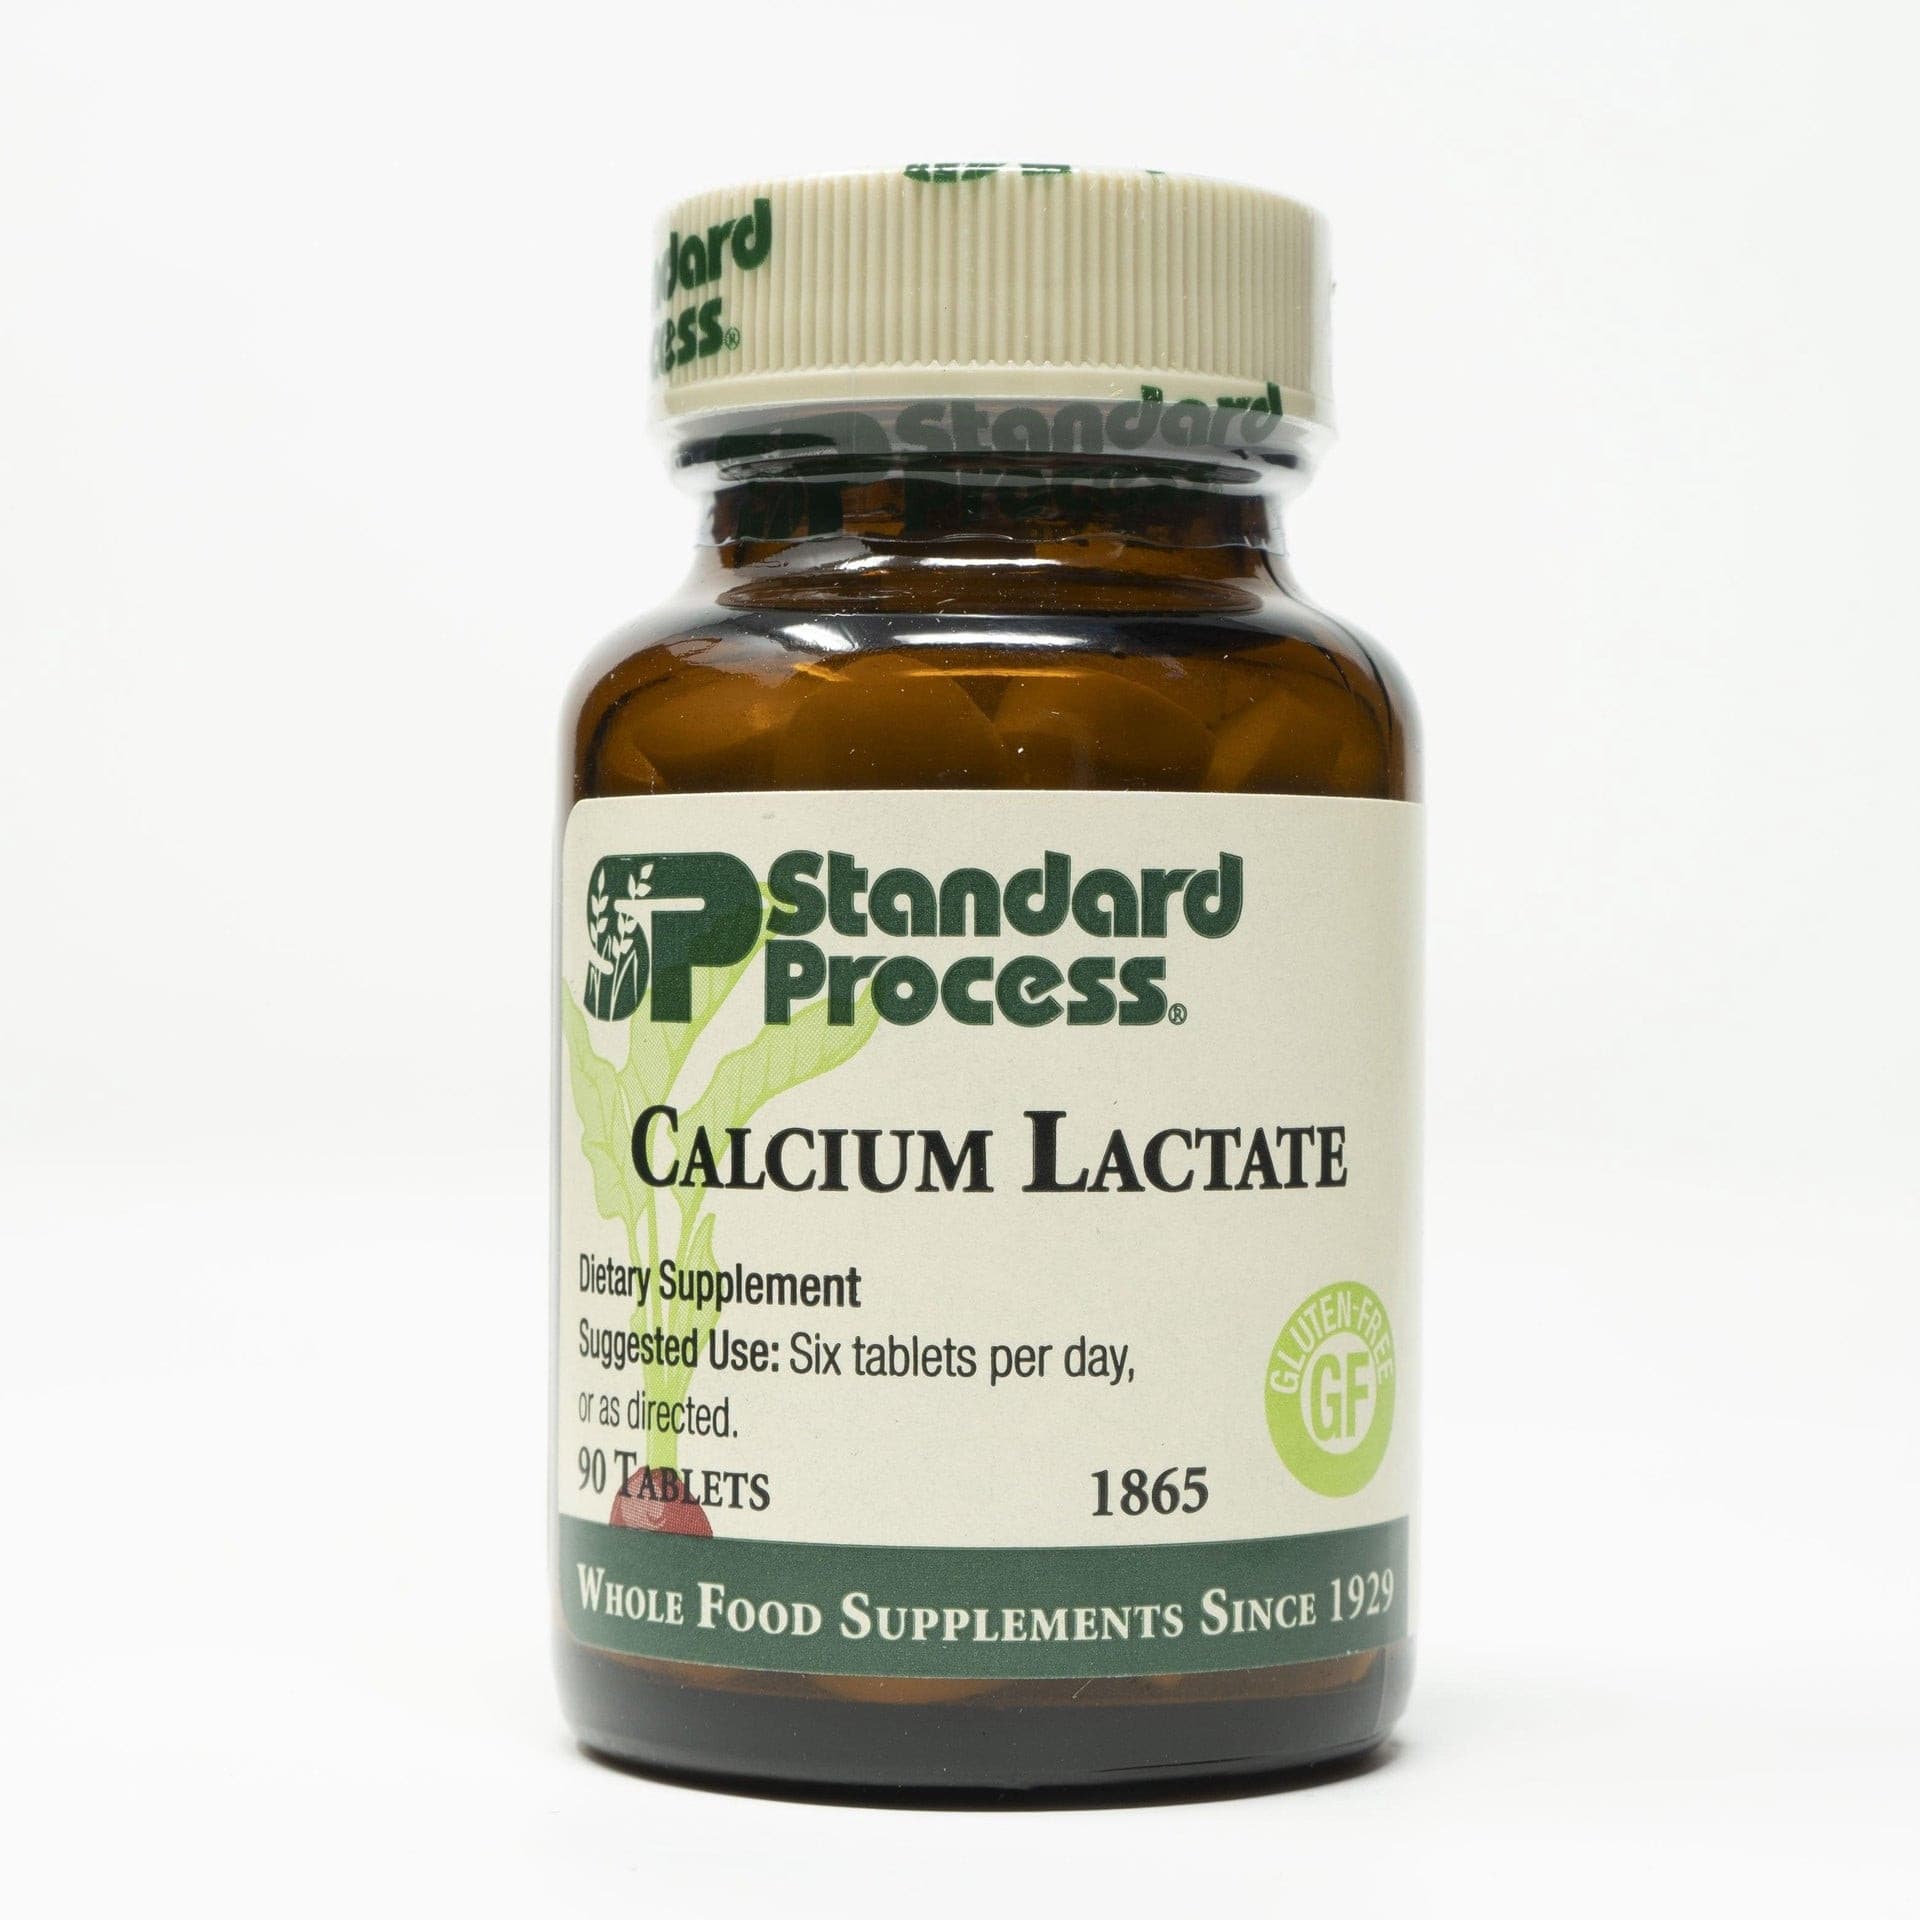 Calcium Lactate 90 Tablets.